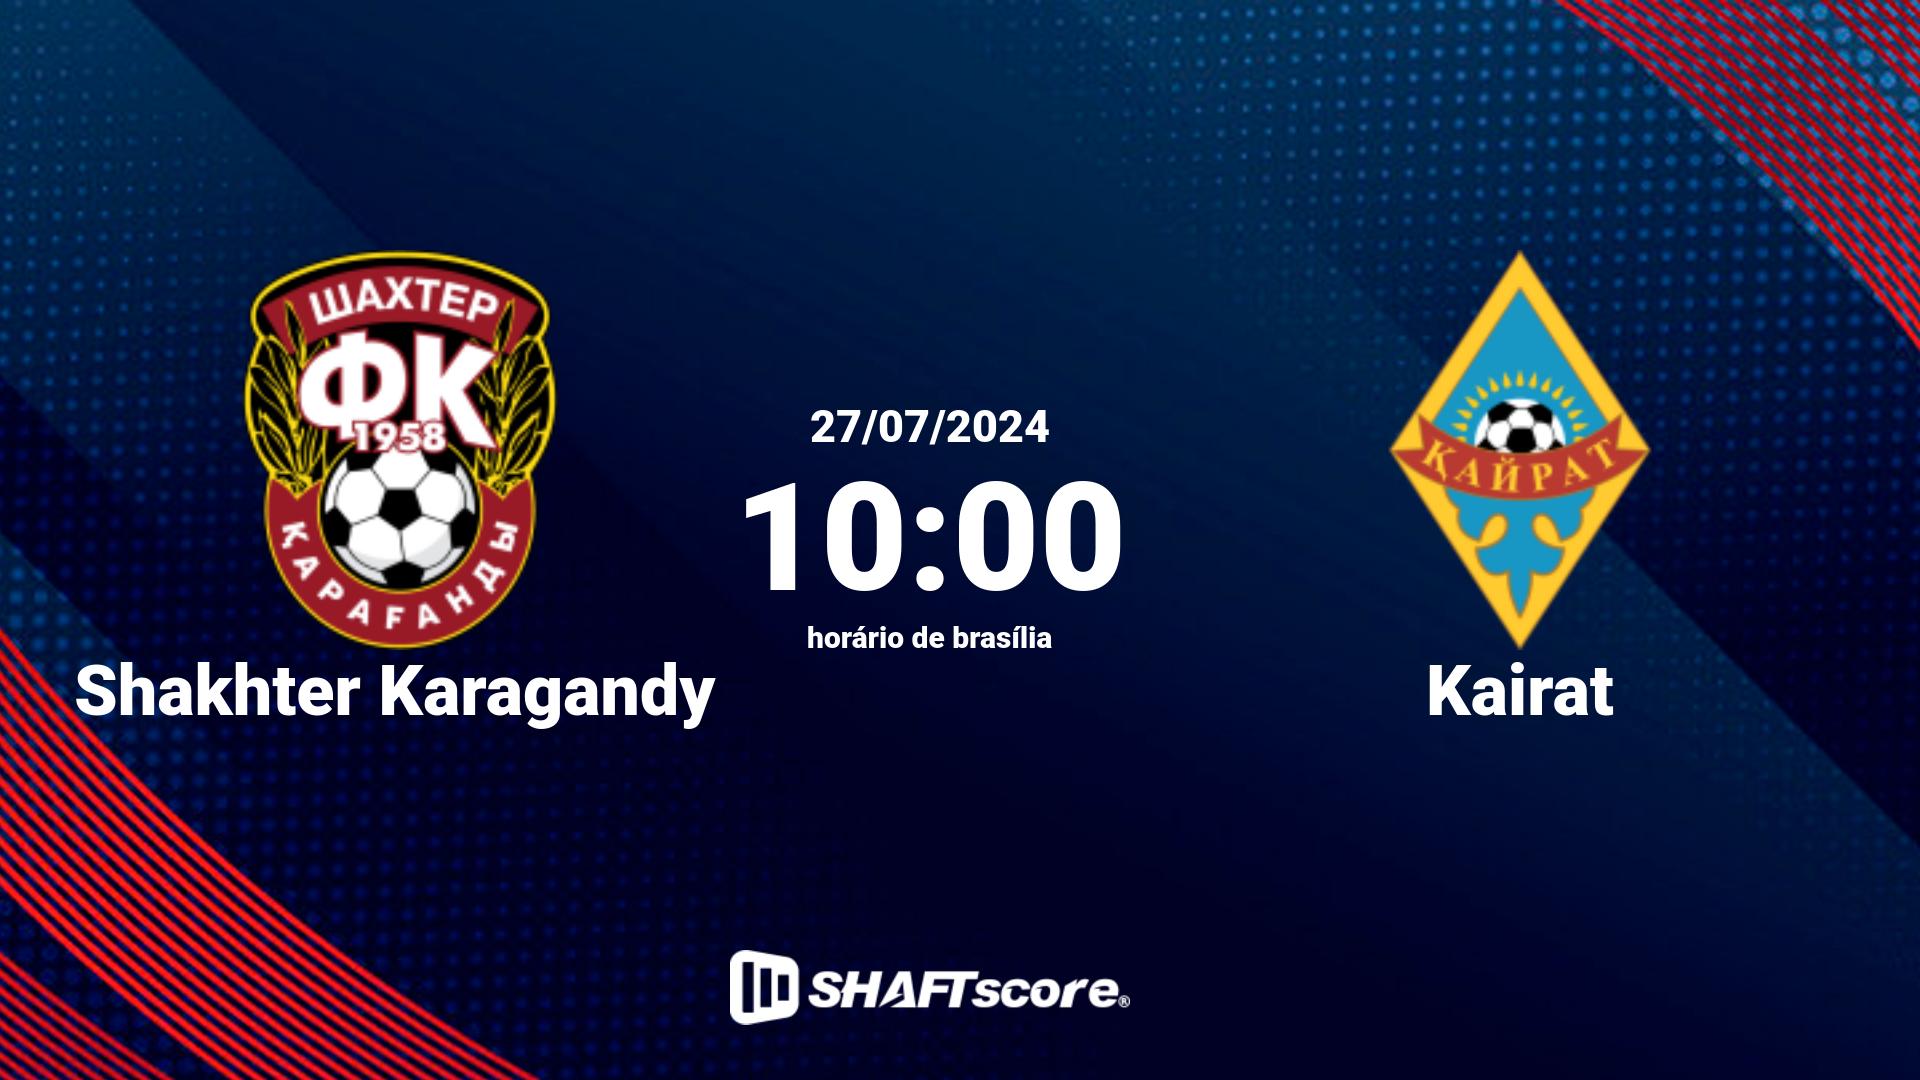 Estatísticas do jogo Shakhter Karagandy vs Kairat 27.07 10:00